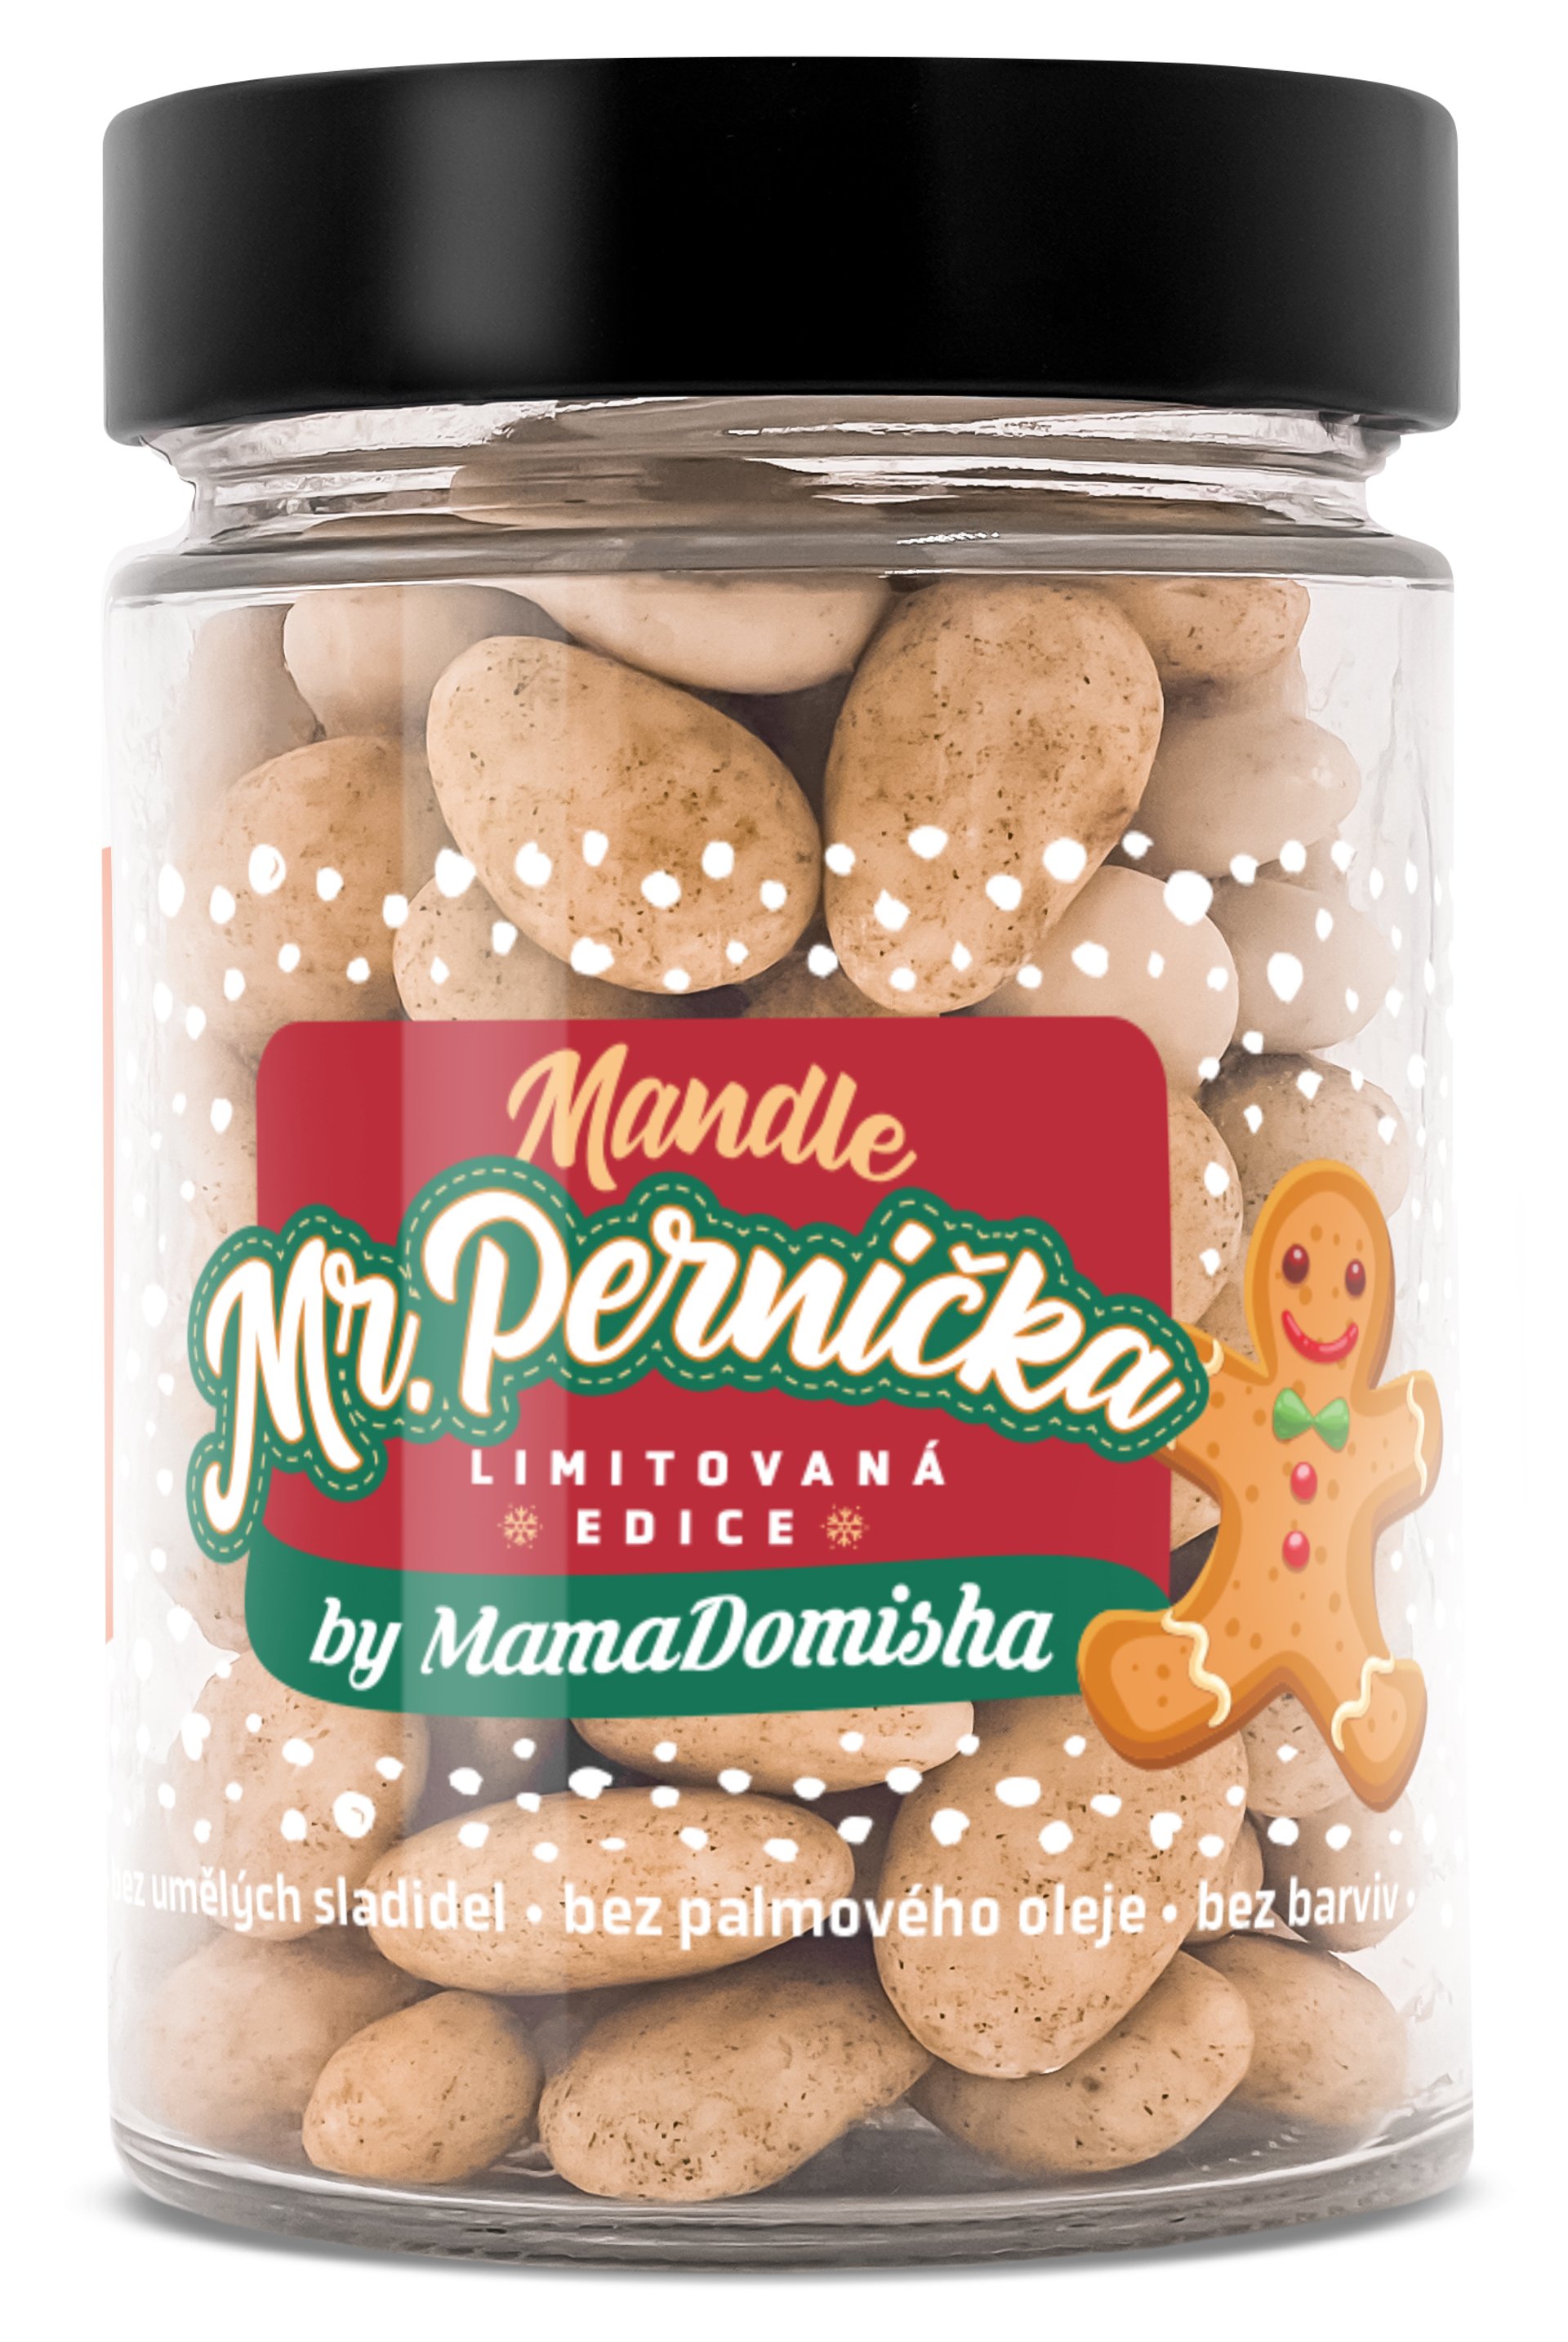 GRIZLY Mandle Mr. Perníčka by @mamadomisha 200 g